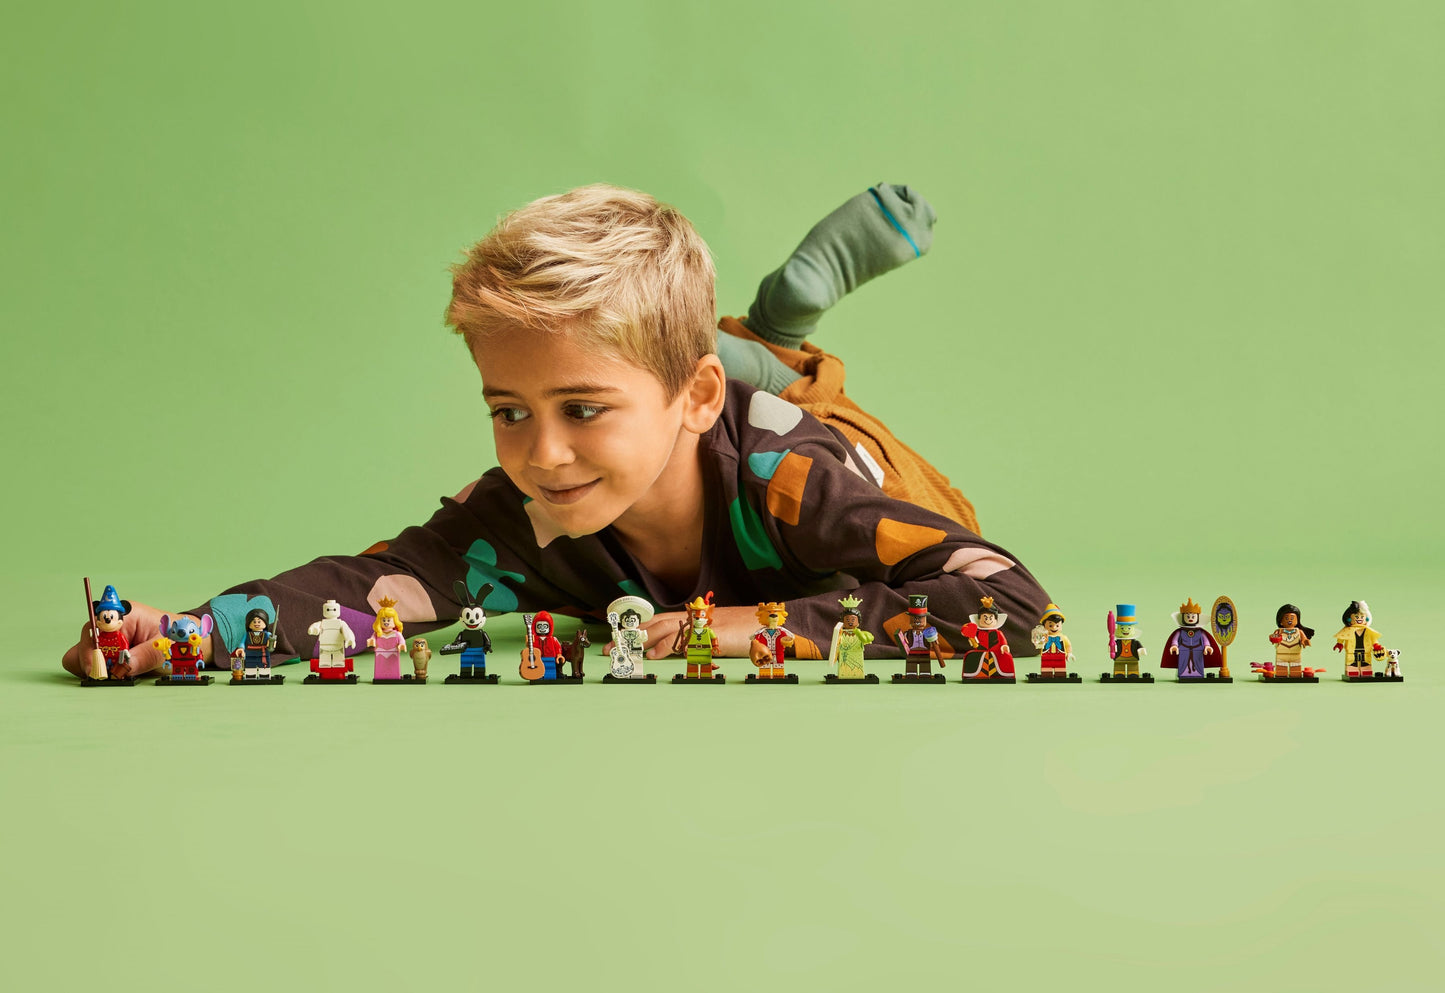 LEGO® Collectable Minifigures 71038 Minifiguren Disney 100 - 36er Box